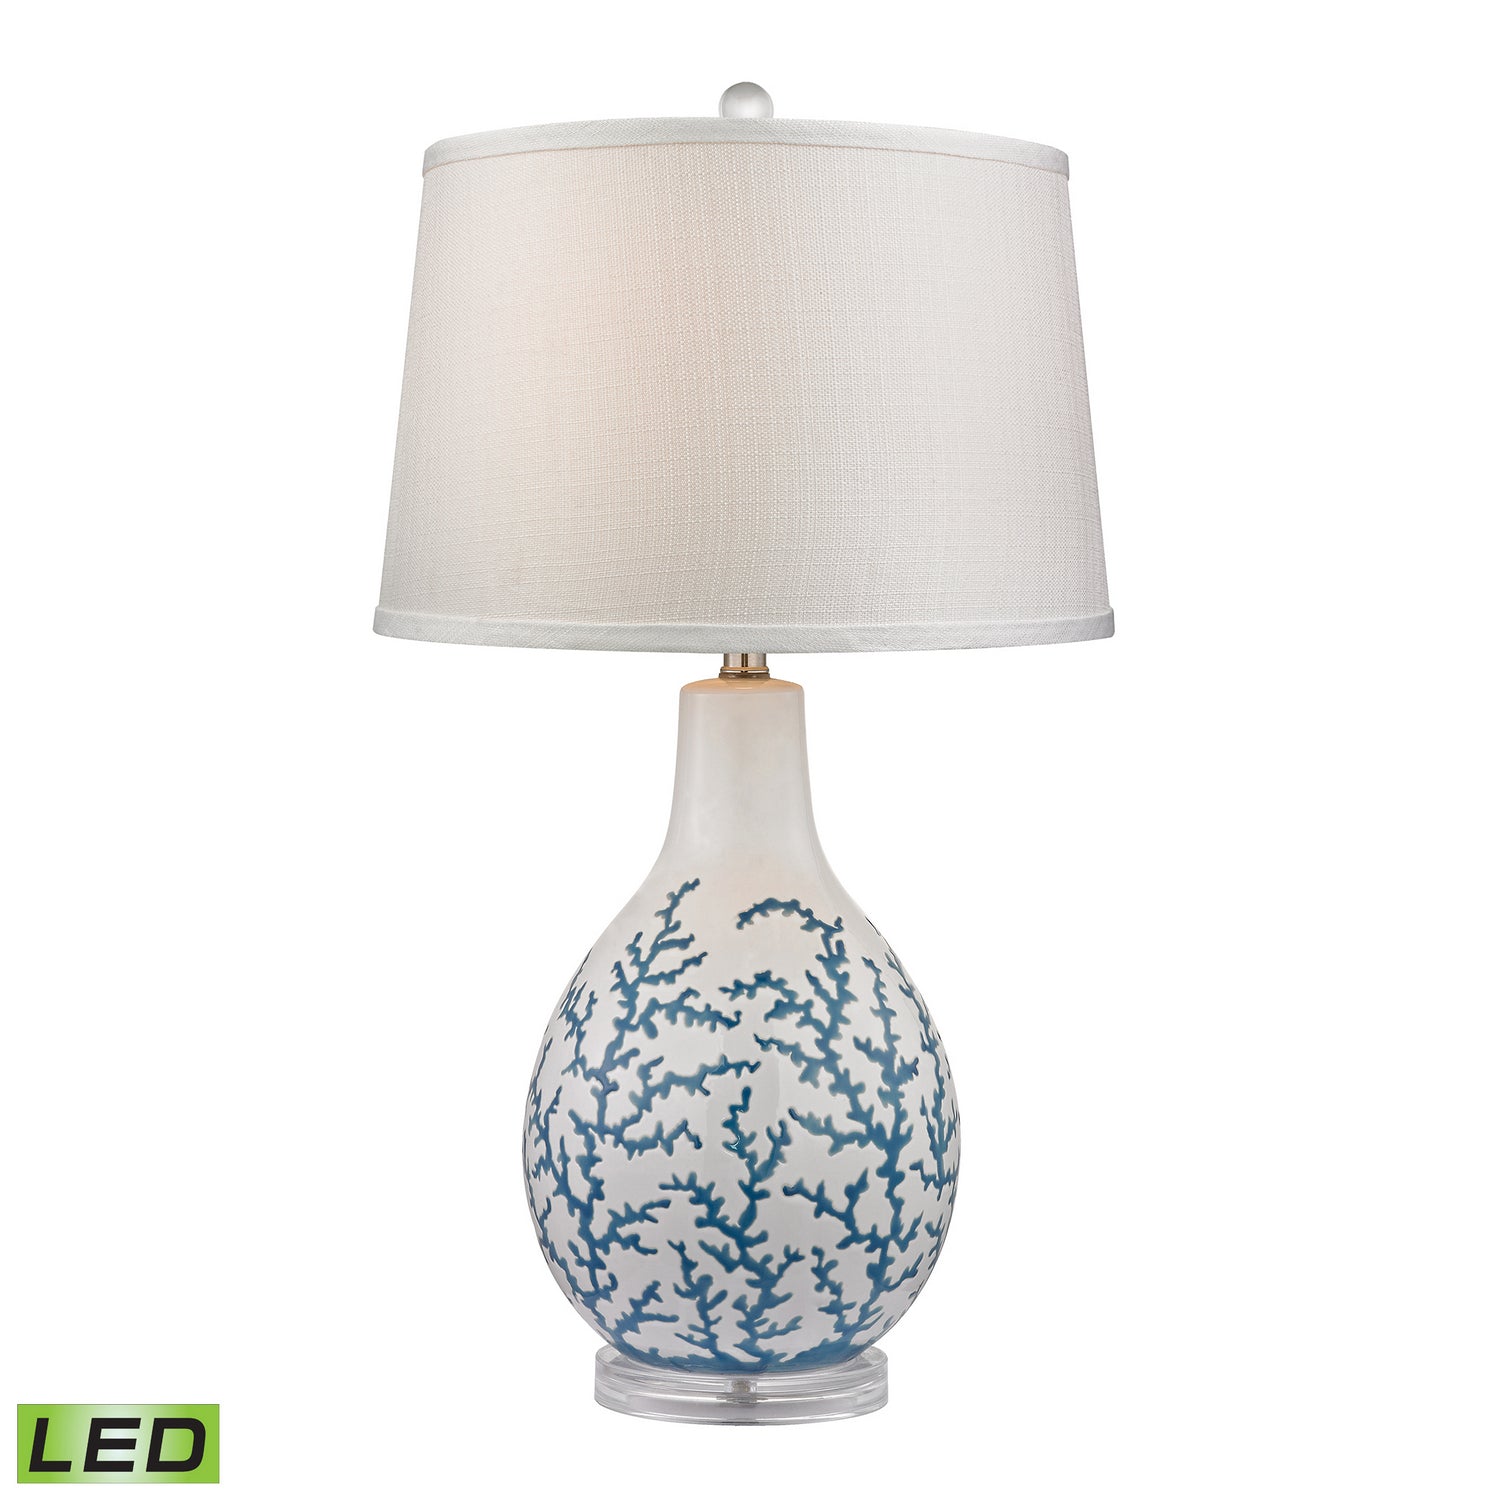 ELK Home - D2478-LED - LED Table Lamp - Sixpenny - Blue